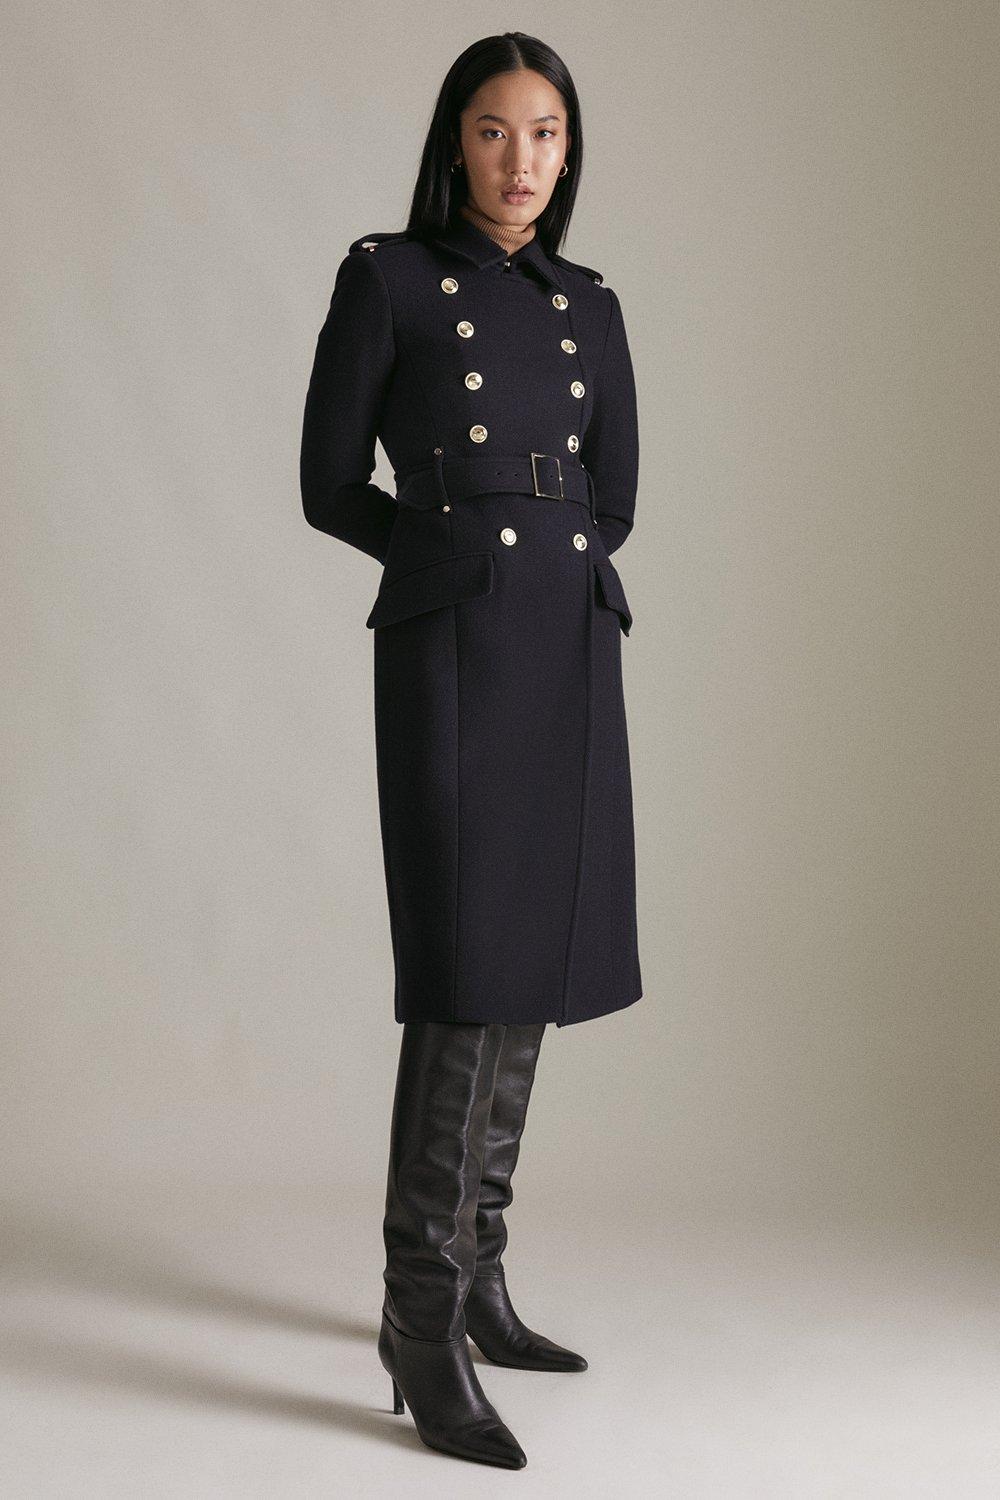 Karen Millen Black Classic Coat Military Trench Tailored Long Jacket 8 to 16 New